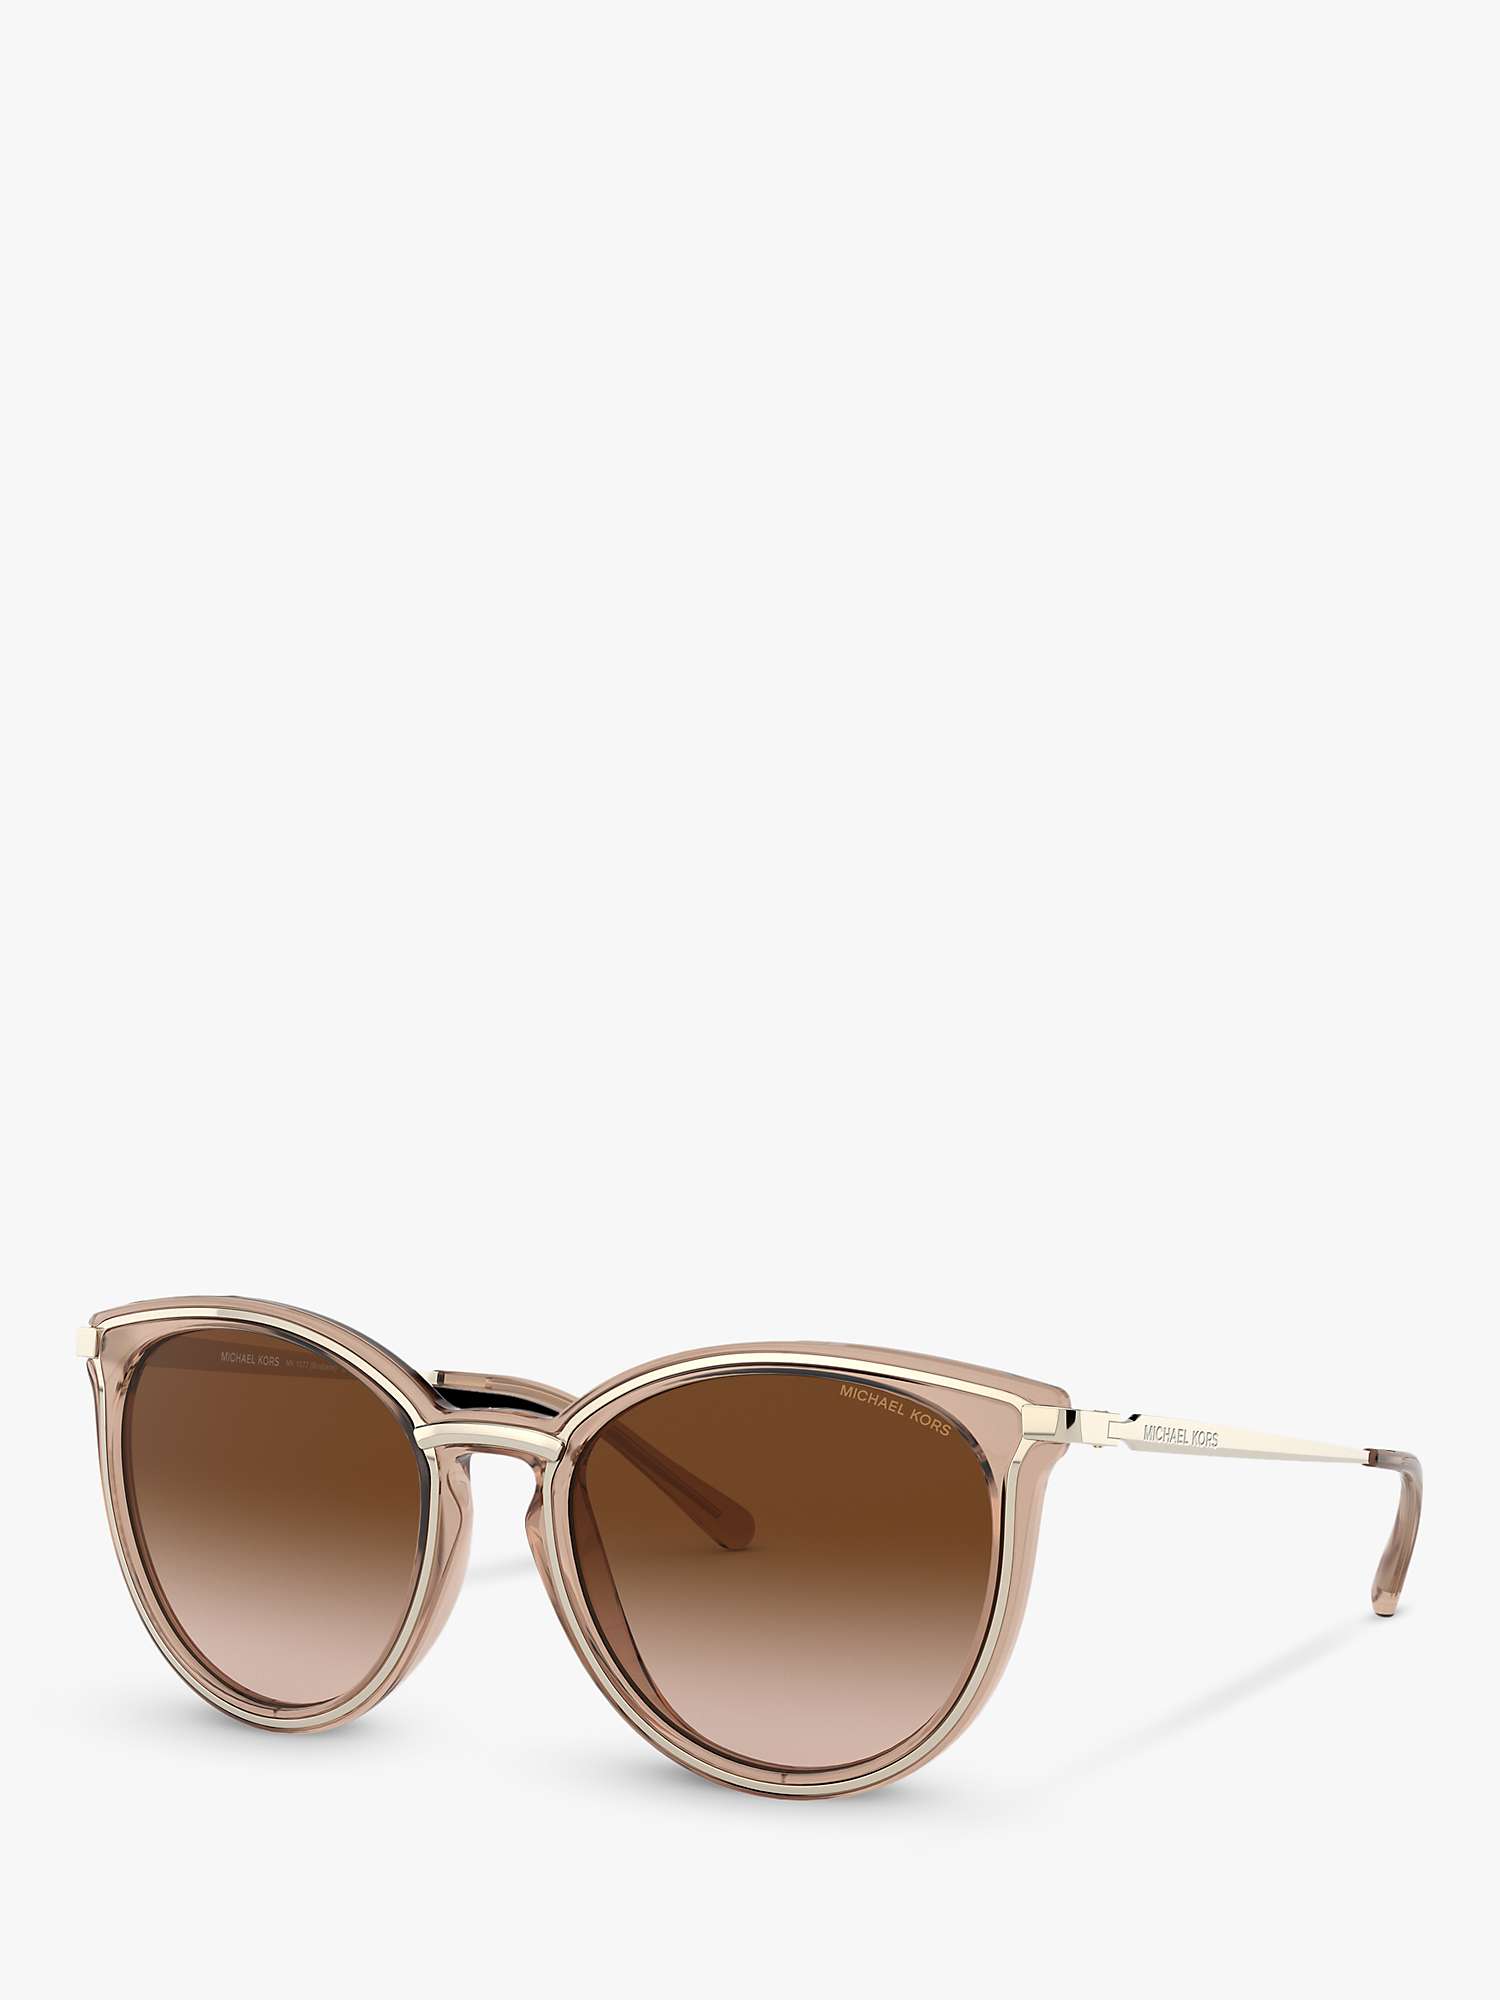 Michael Kors MK1077 Women's Brisbane Round Sunglasses, Light Gold/Brown ...